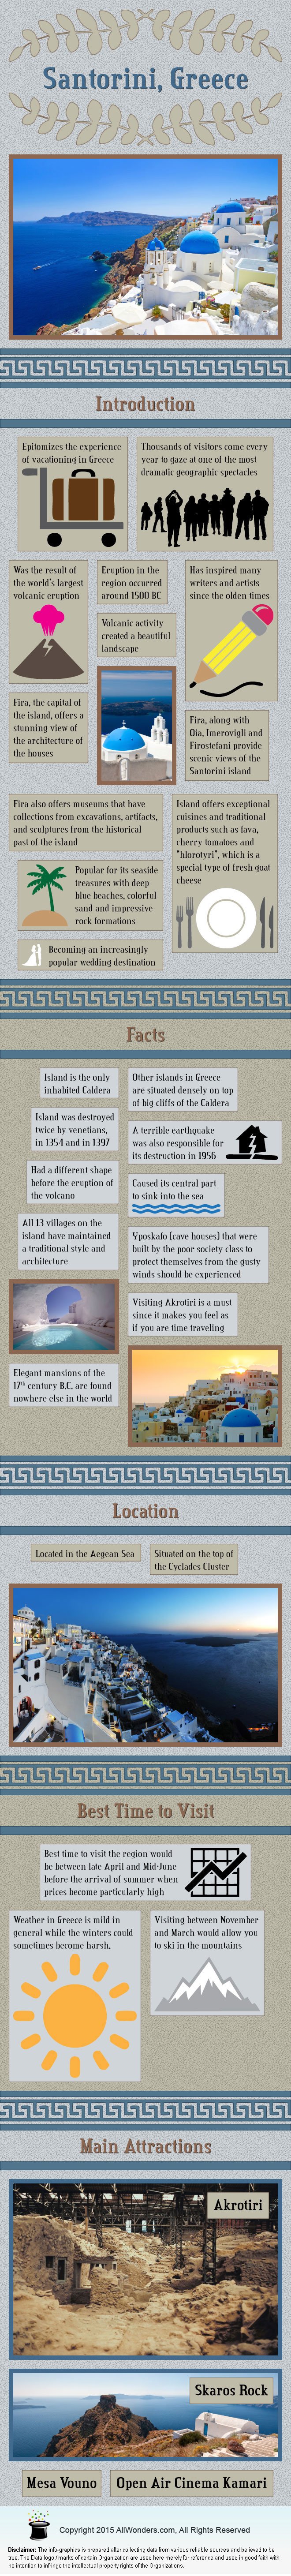 Santorini Island, Greece - Facts & Infographic